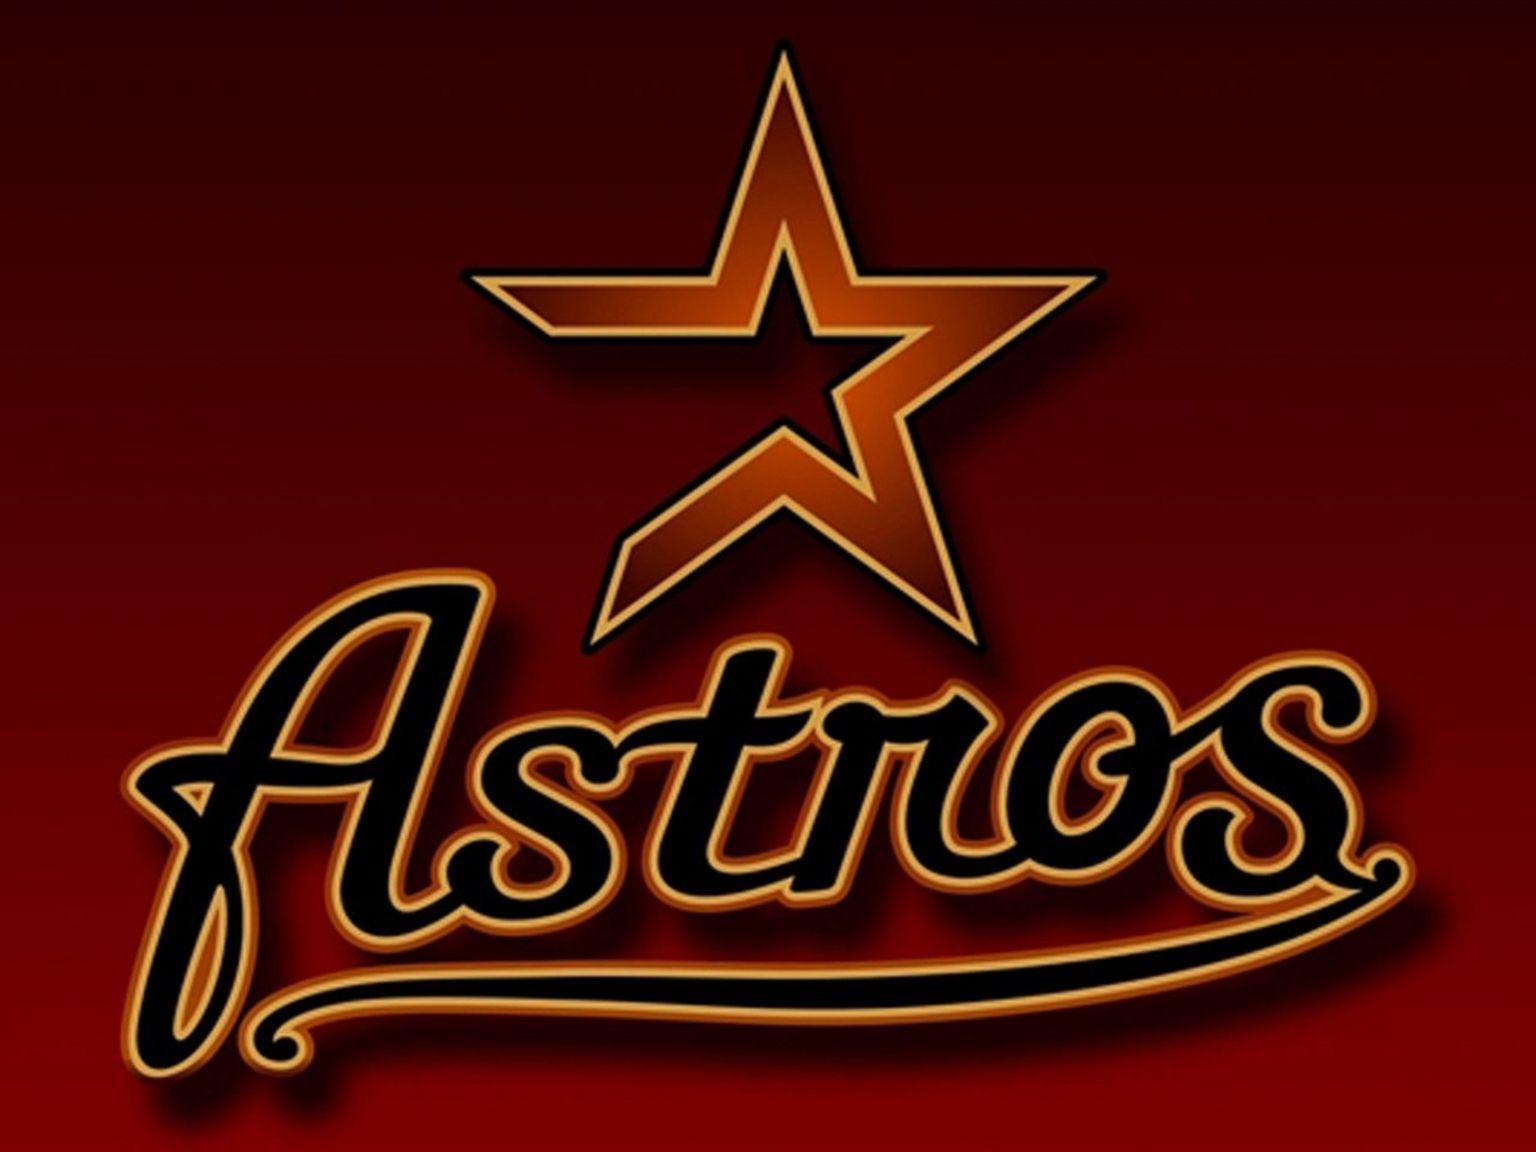 Astros Wallpapers - Top Free Astros